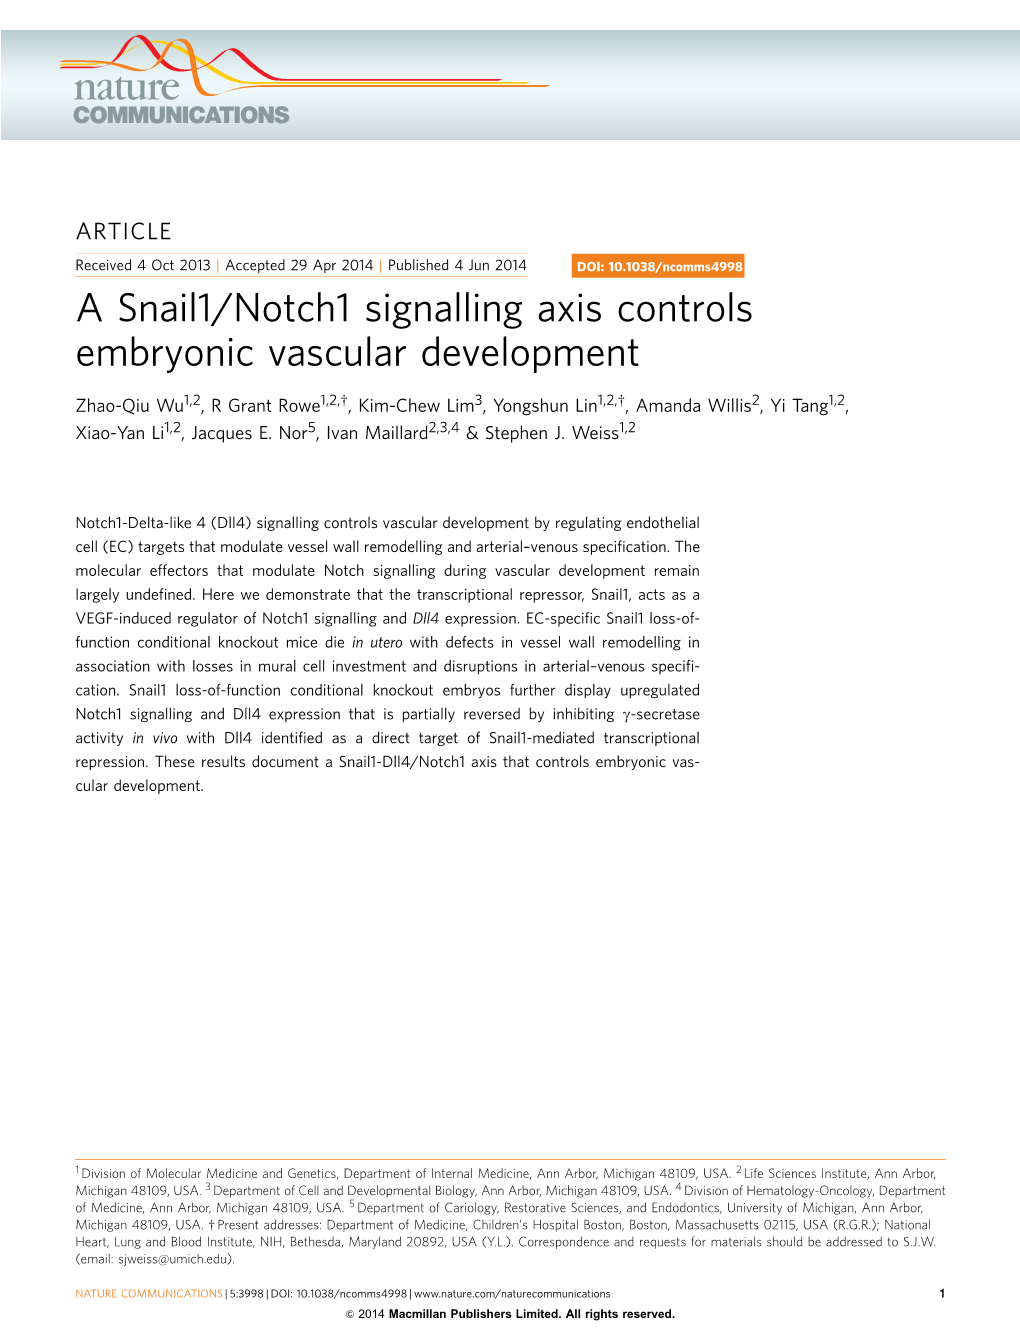 A Snail1/Notch1 Signalling Axis Controls Embryonic Vascular Development